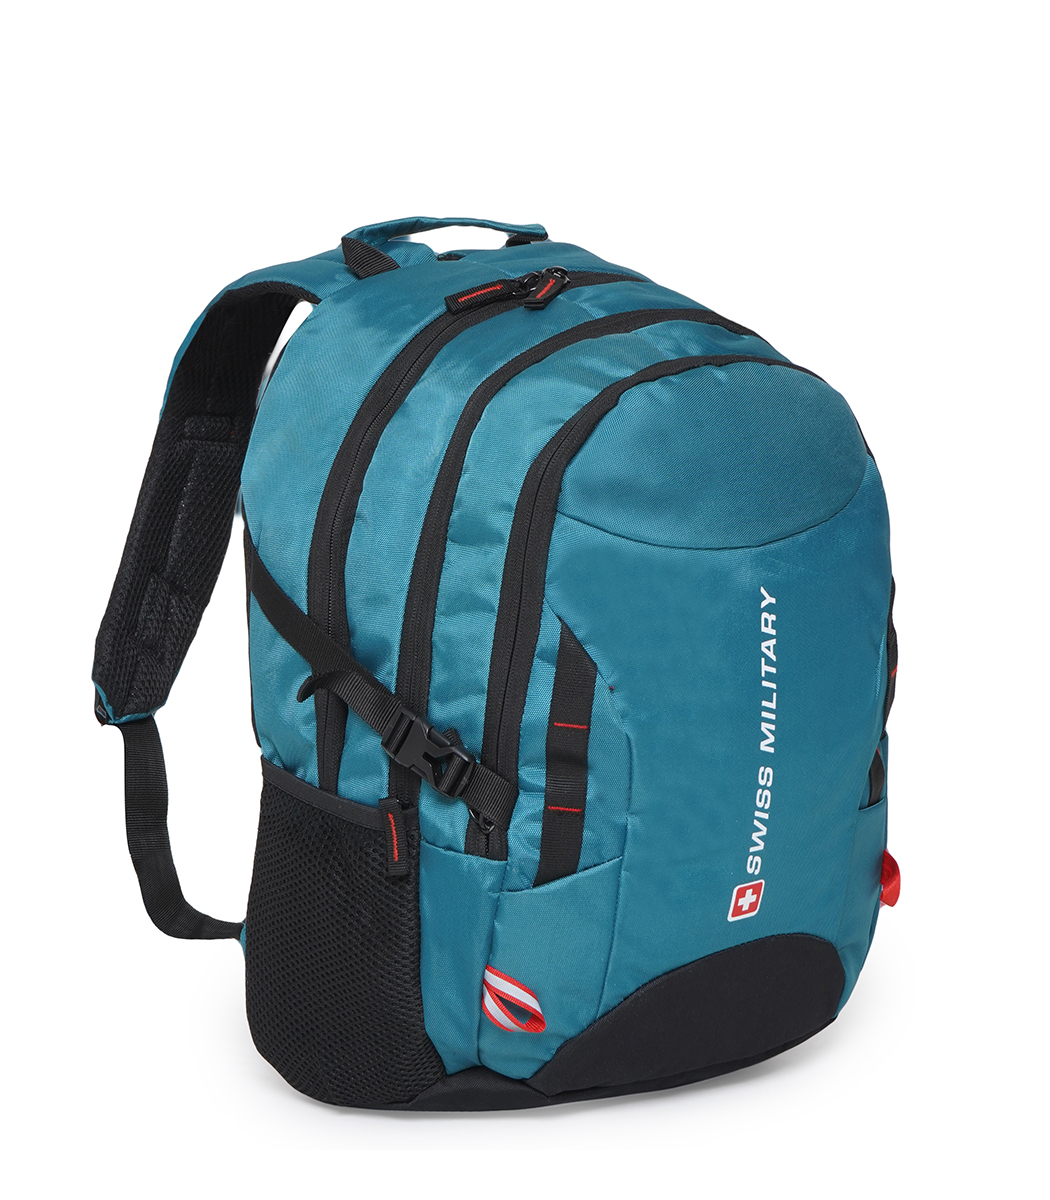 Shop Swiss Militray Laptop Backpacks - Buy Laptop Backpacks online